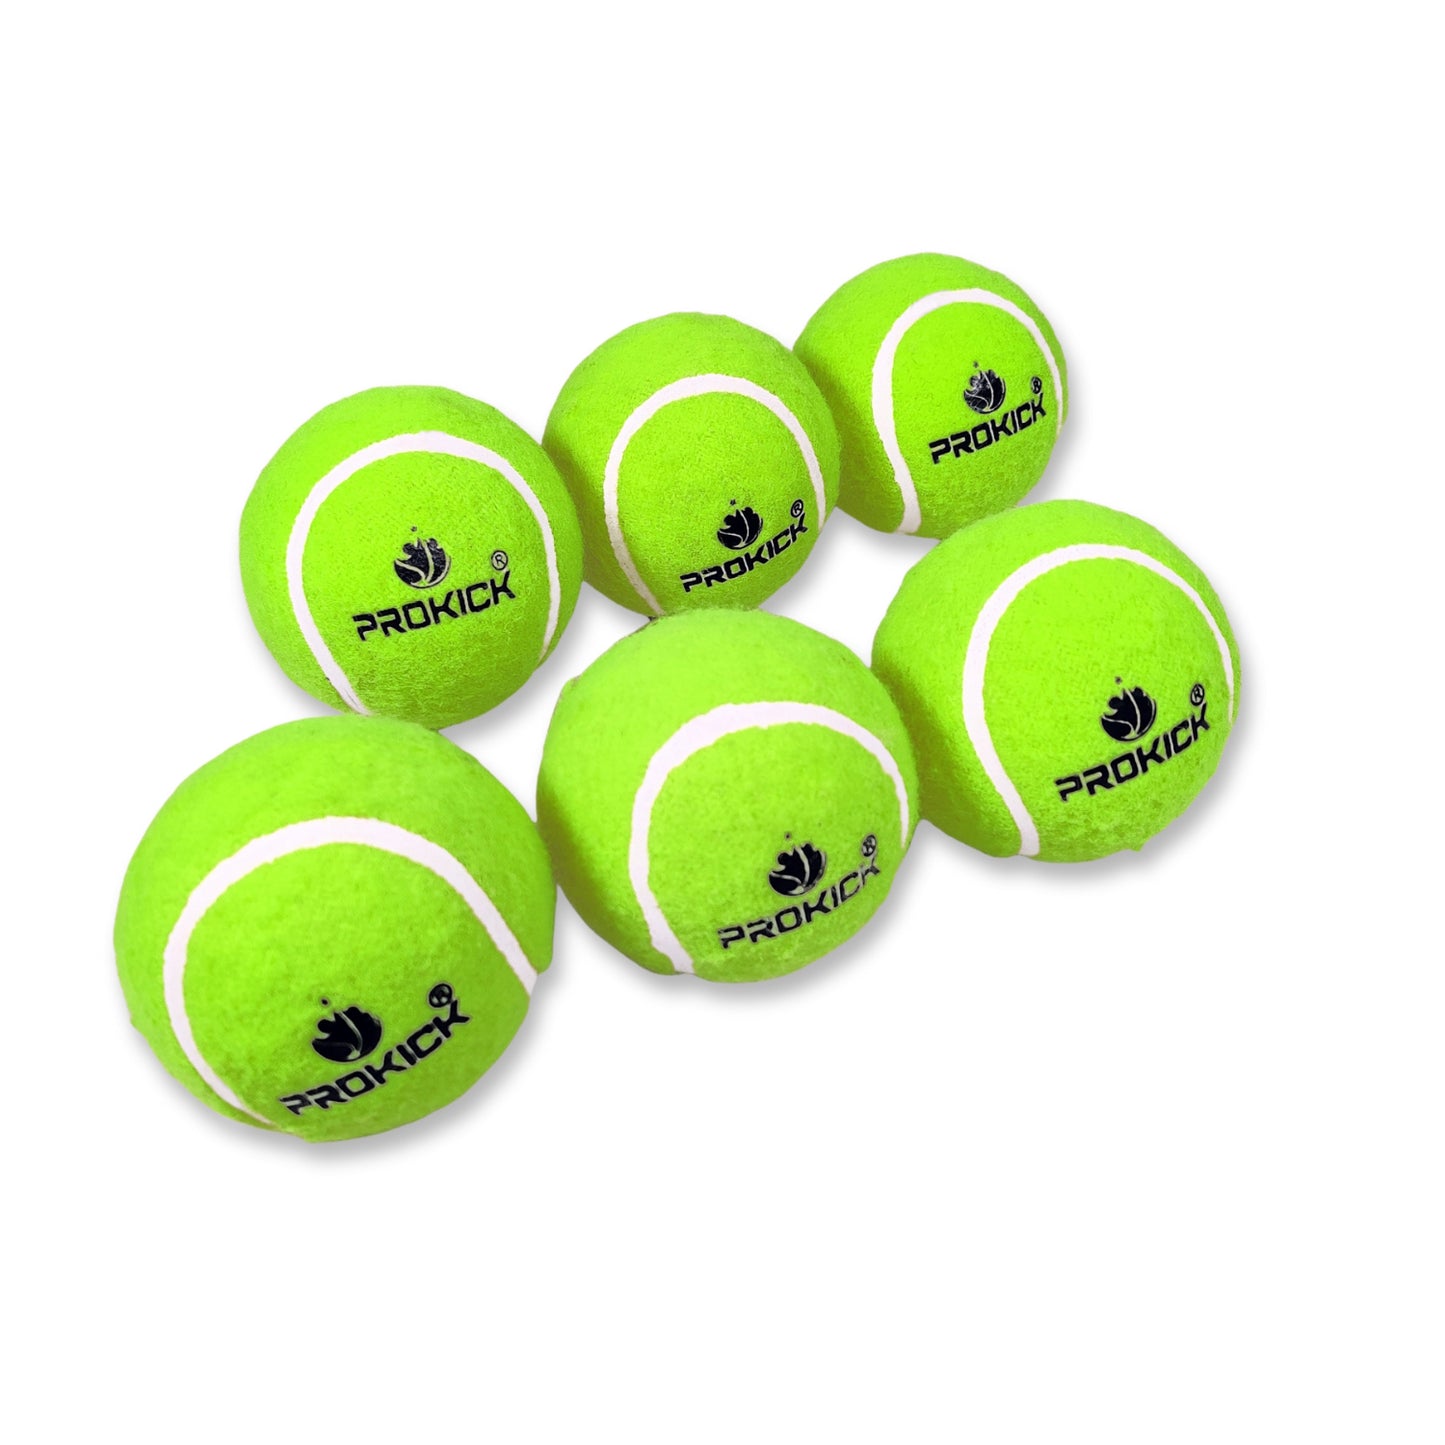 Prokick Heavy Cricket Tennis Ball, Green (Pack of 6) - Best Price online Prokicksports.com